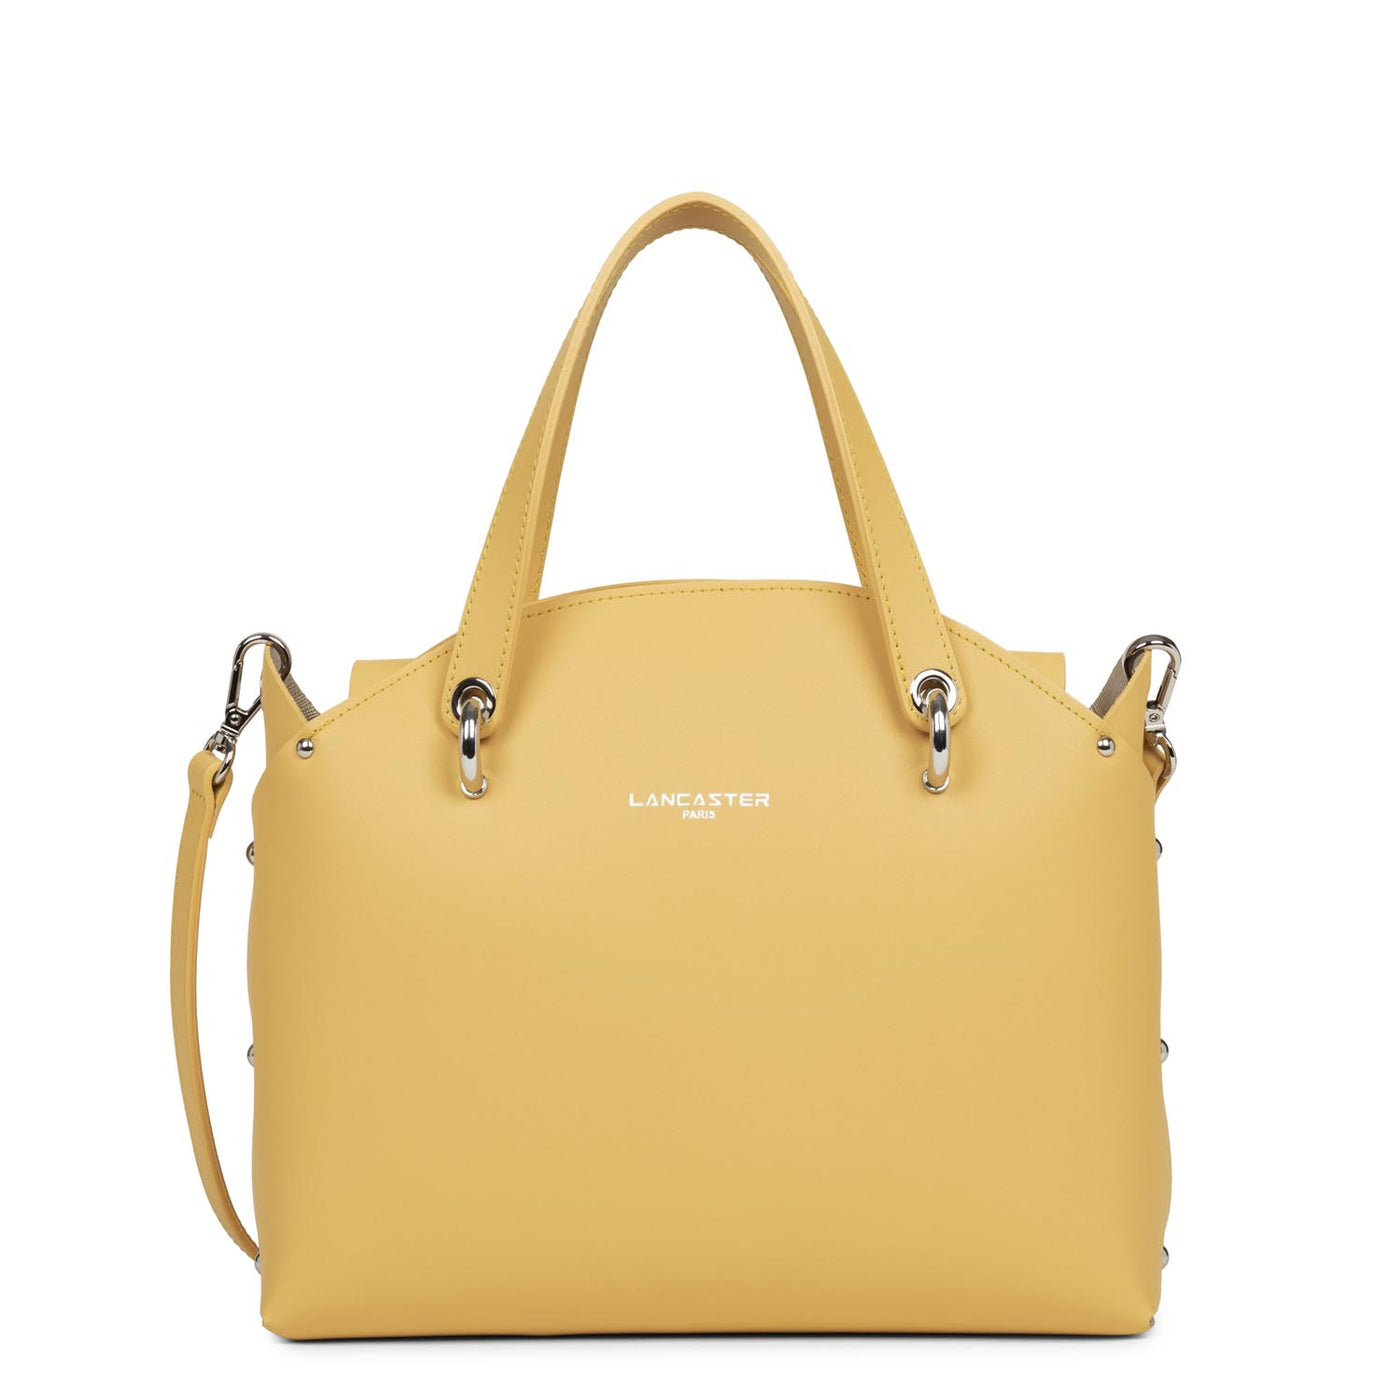 handbag - city flore #couleur_ocre-in-champagne